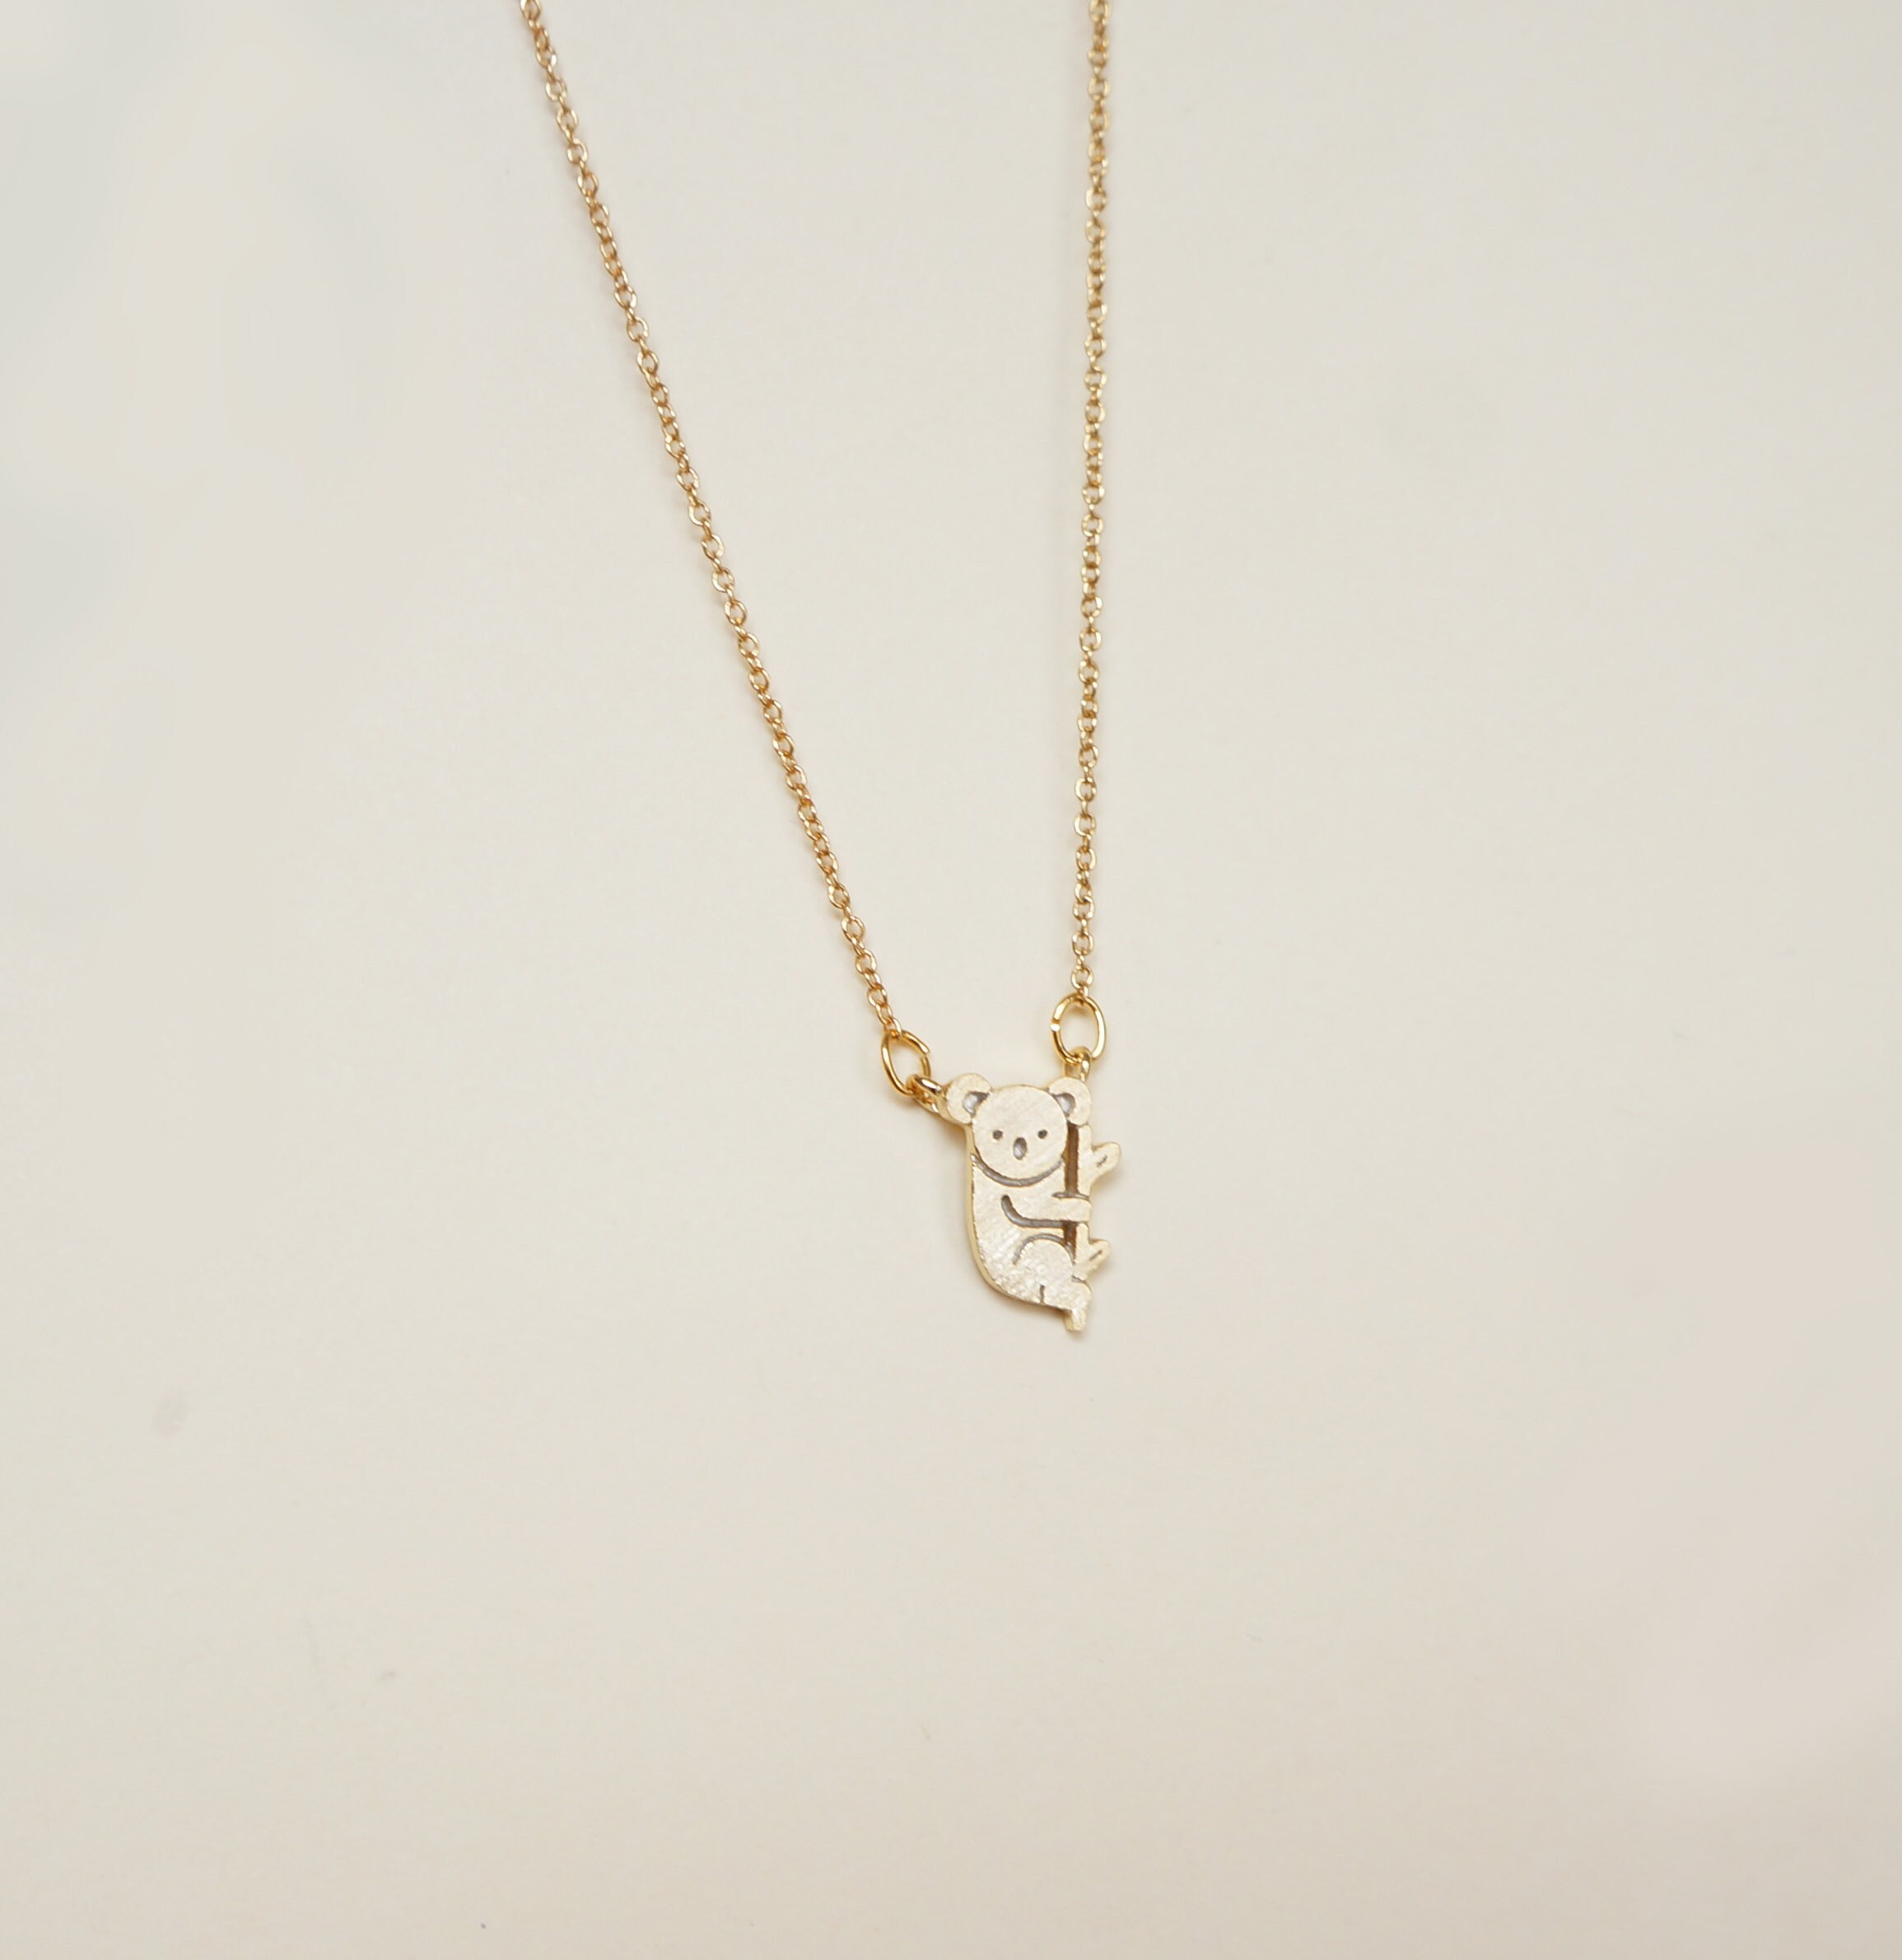 Gold Petite Koala Necklace Tiny Charm Necklace Delicate Gift - Etsy